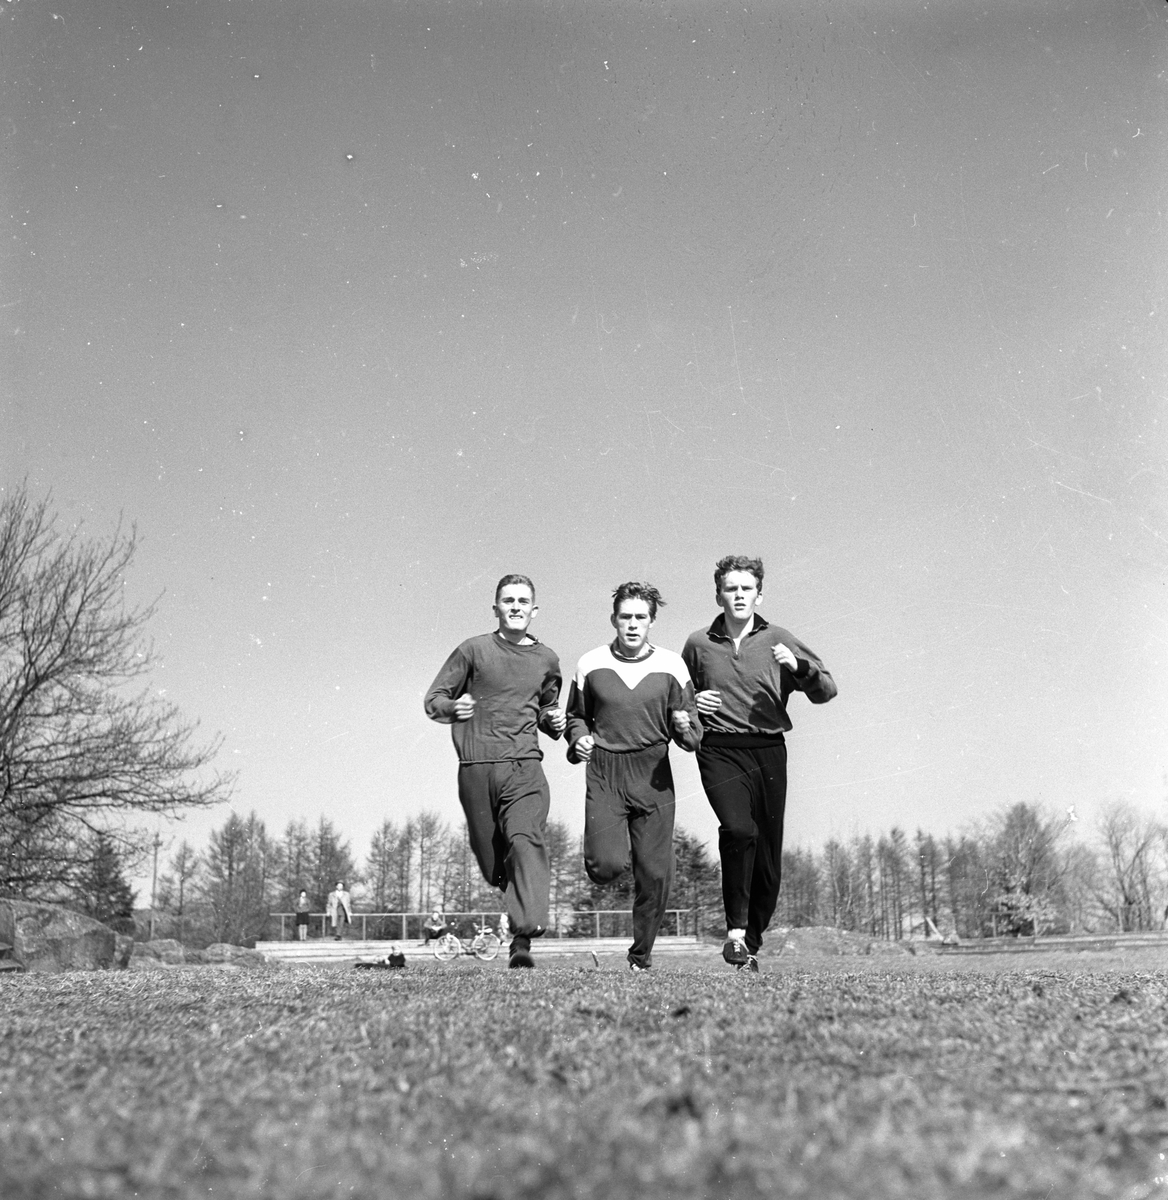 Fredrikstad, 31.03.1957, friidrettstrening.  Erik Greaker, Erik Hauge, Per Winther under løpetrening.